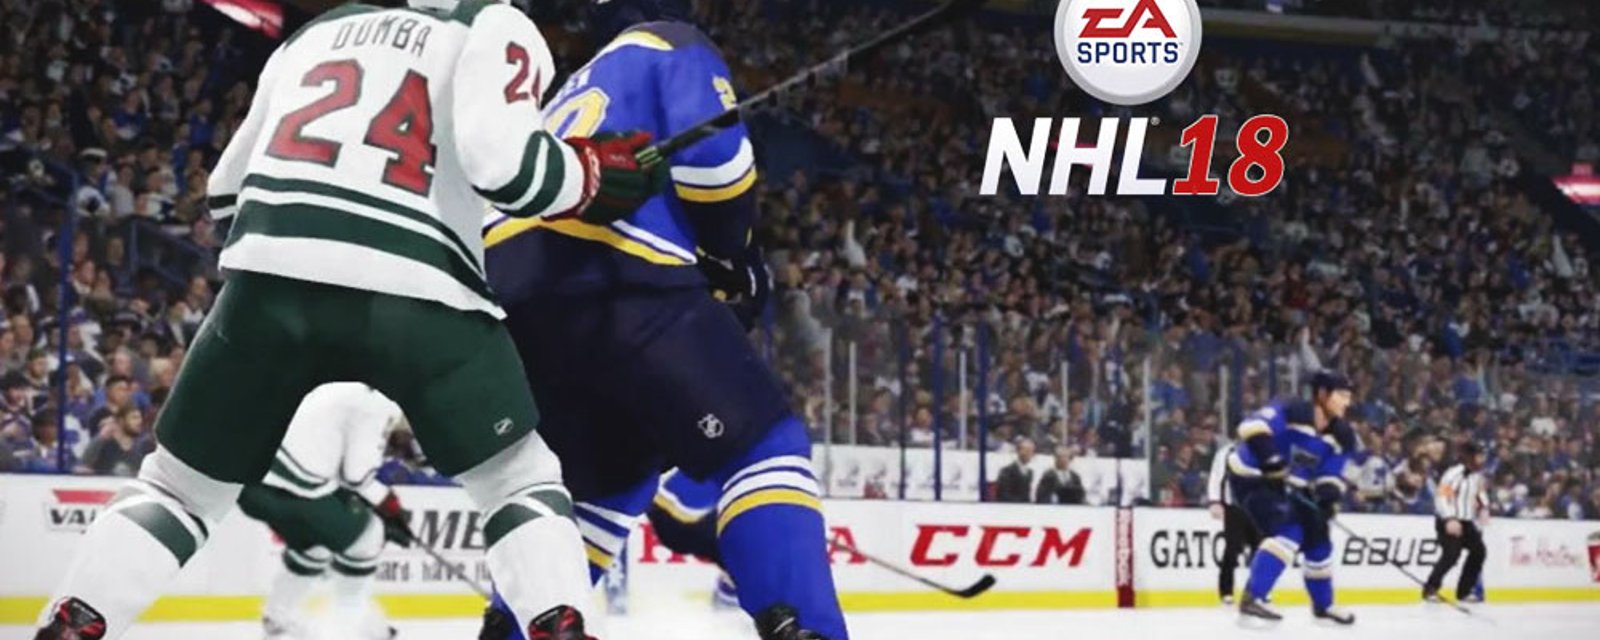 EA Sports announces NHL 18 cover athlete